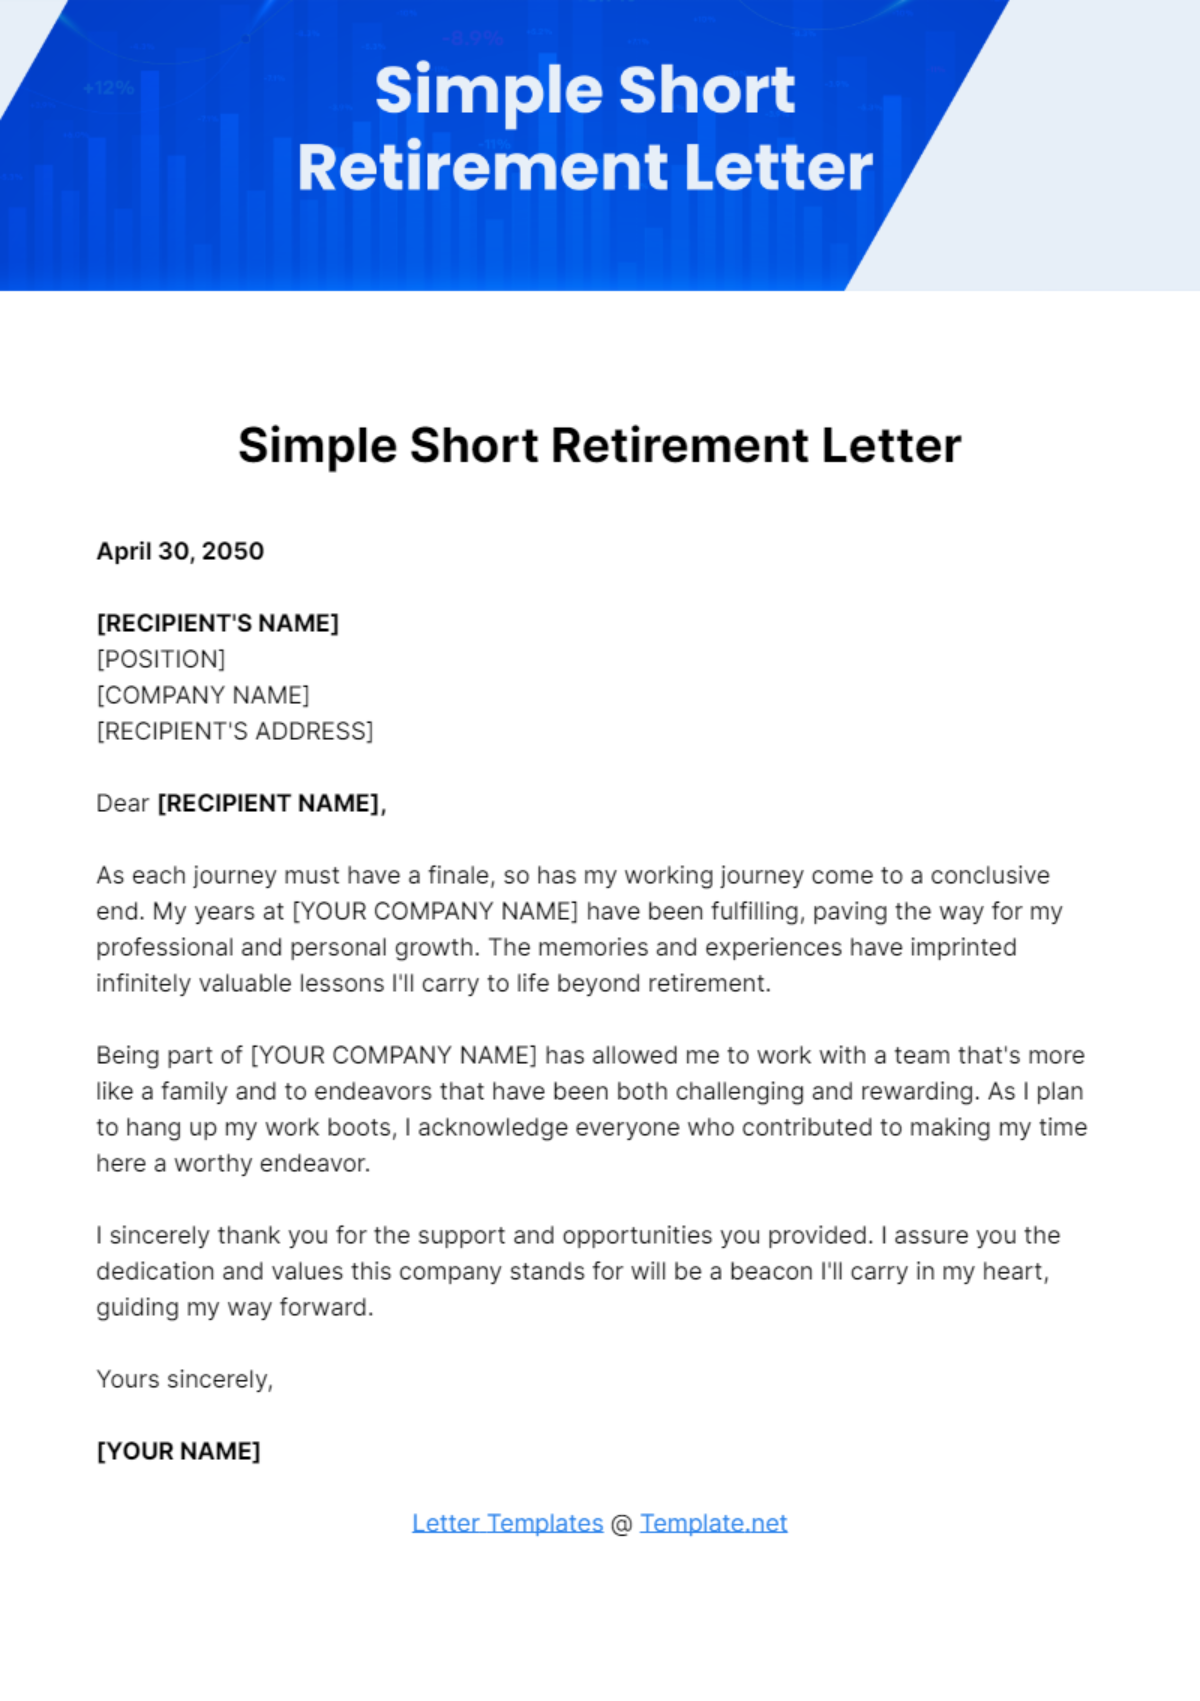 Simple Short Retirement Letter Template